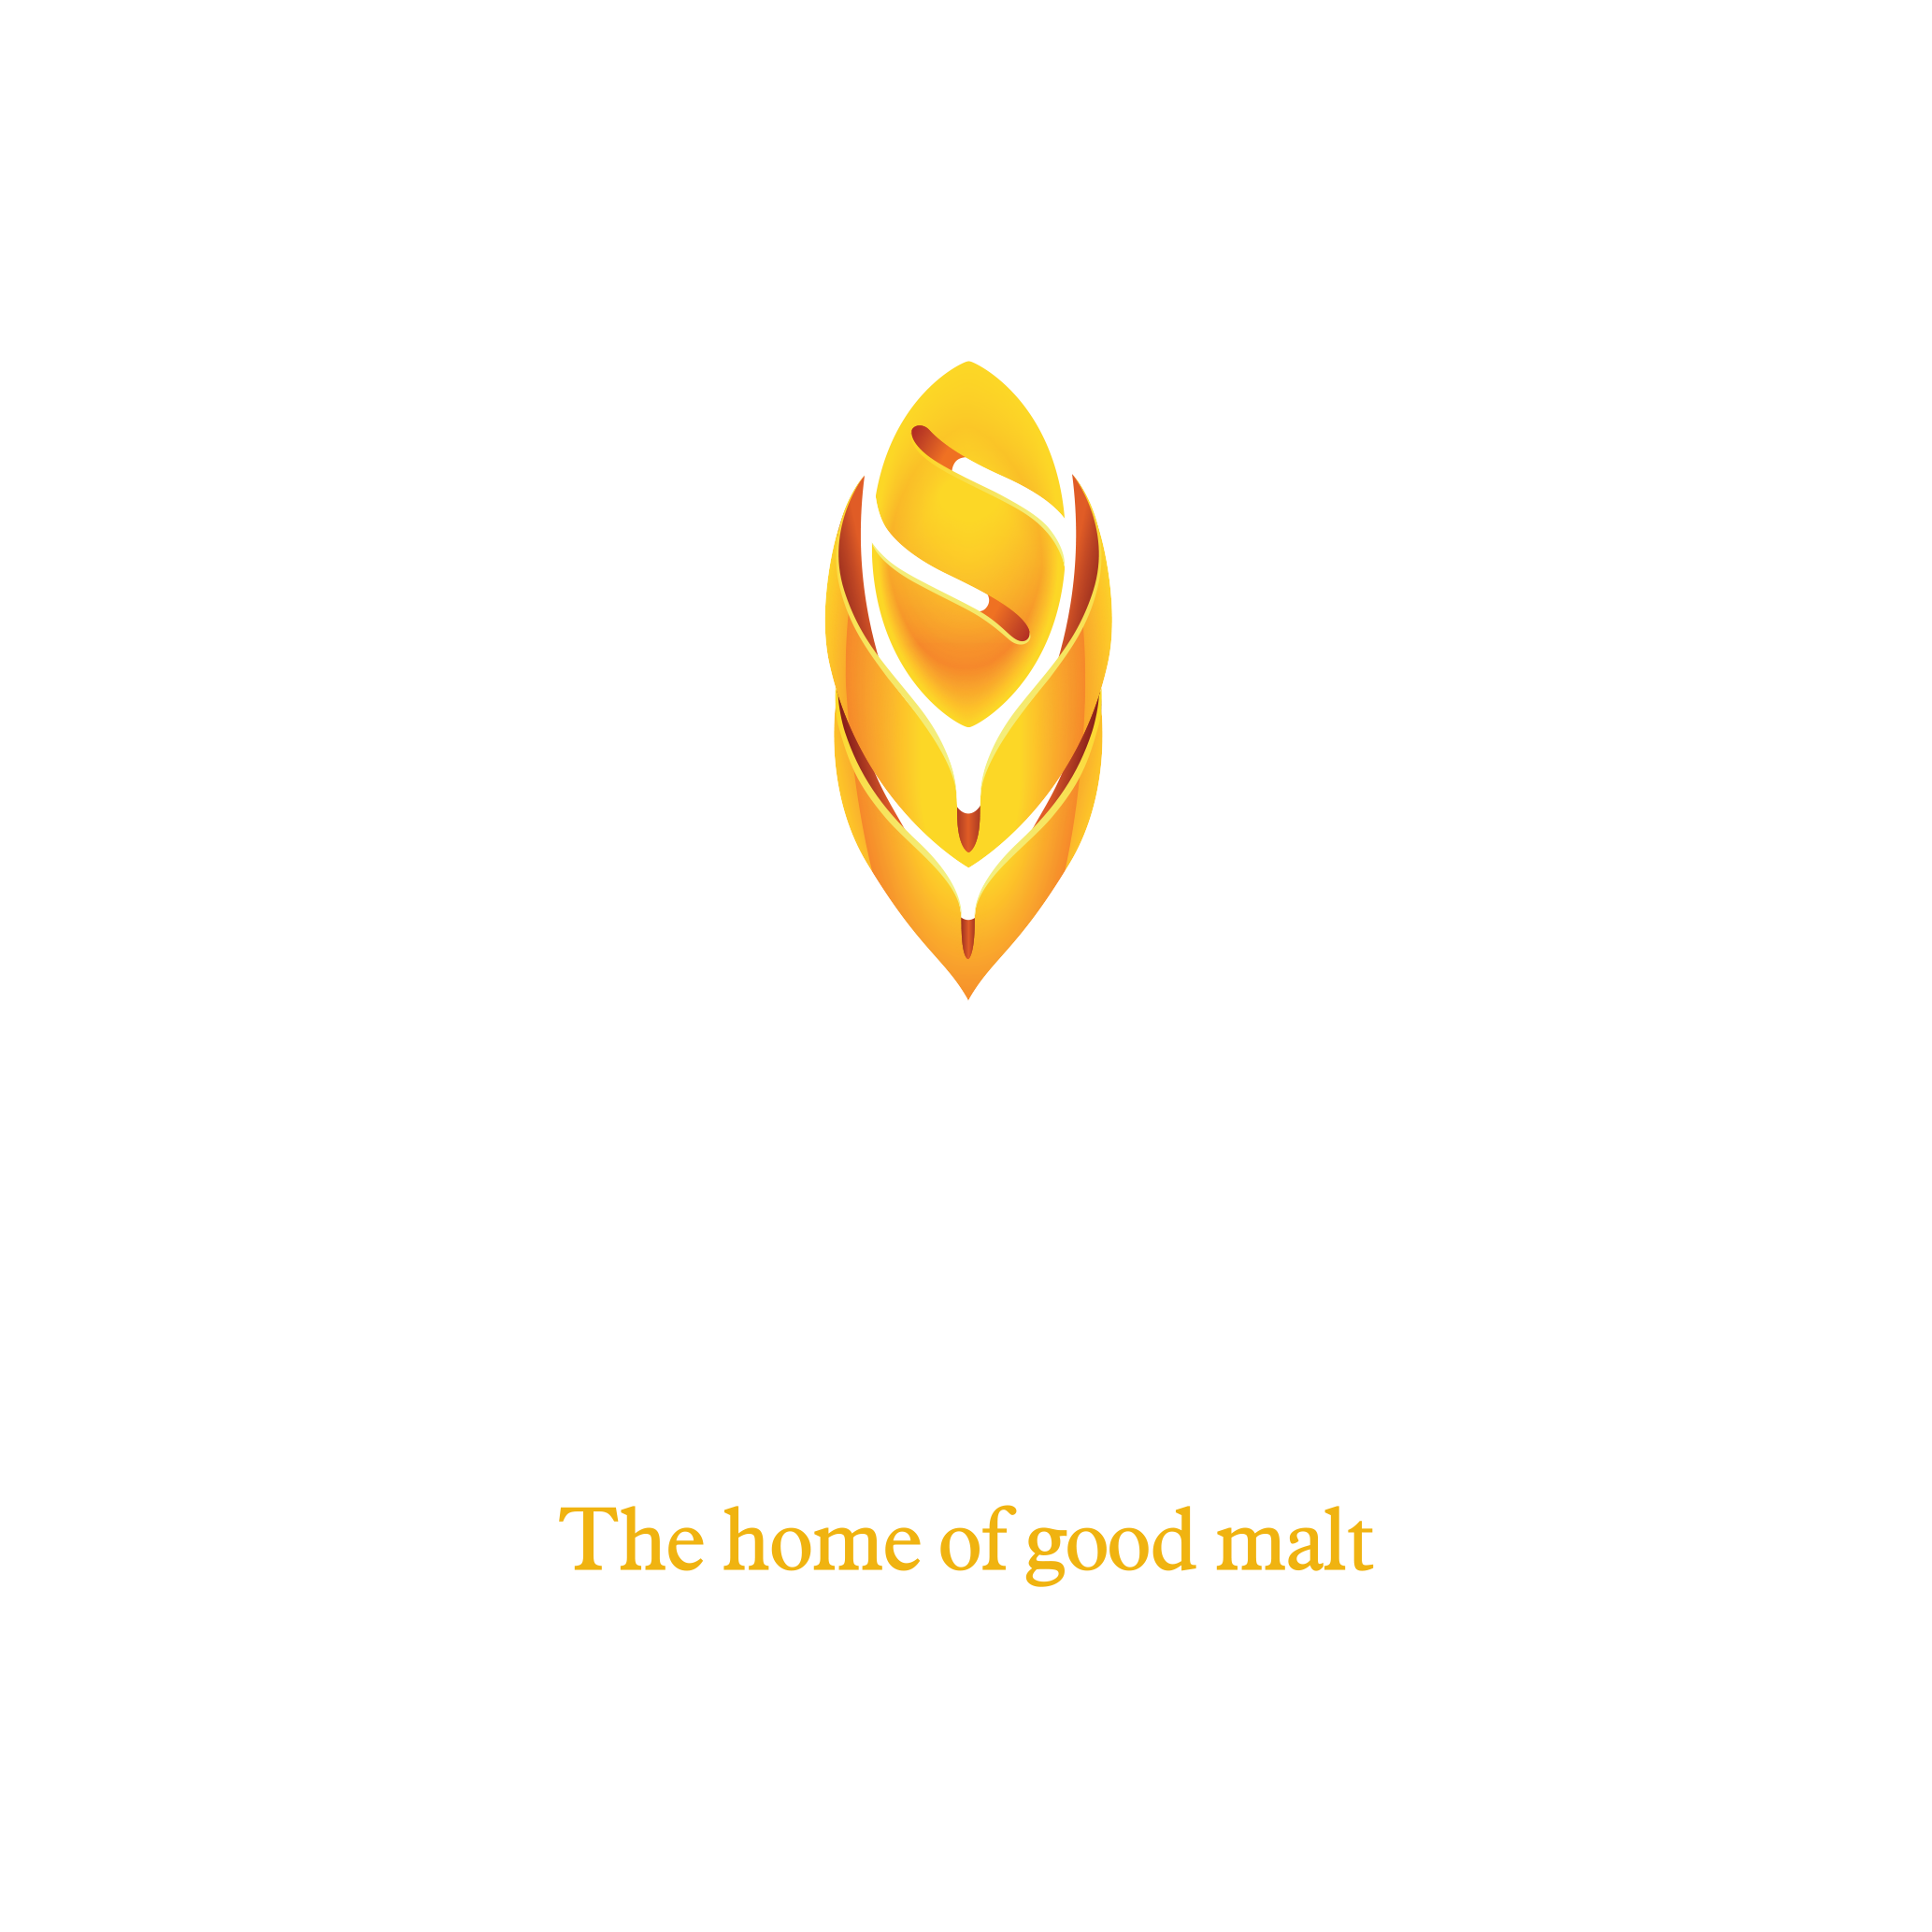 Simpsons Malt Registered logo reversed (clear) NEW.png